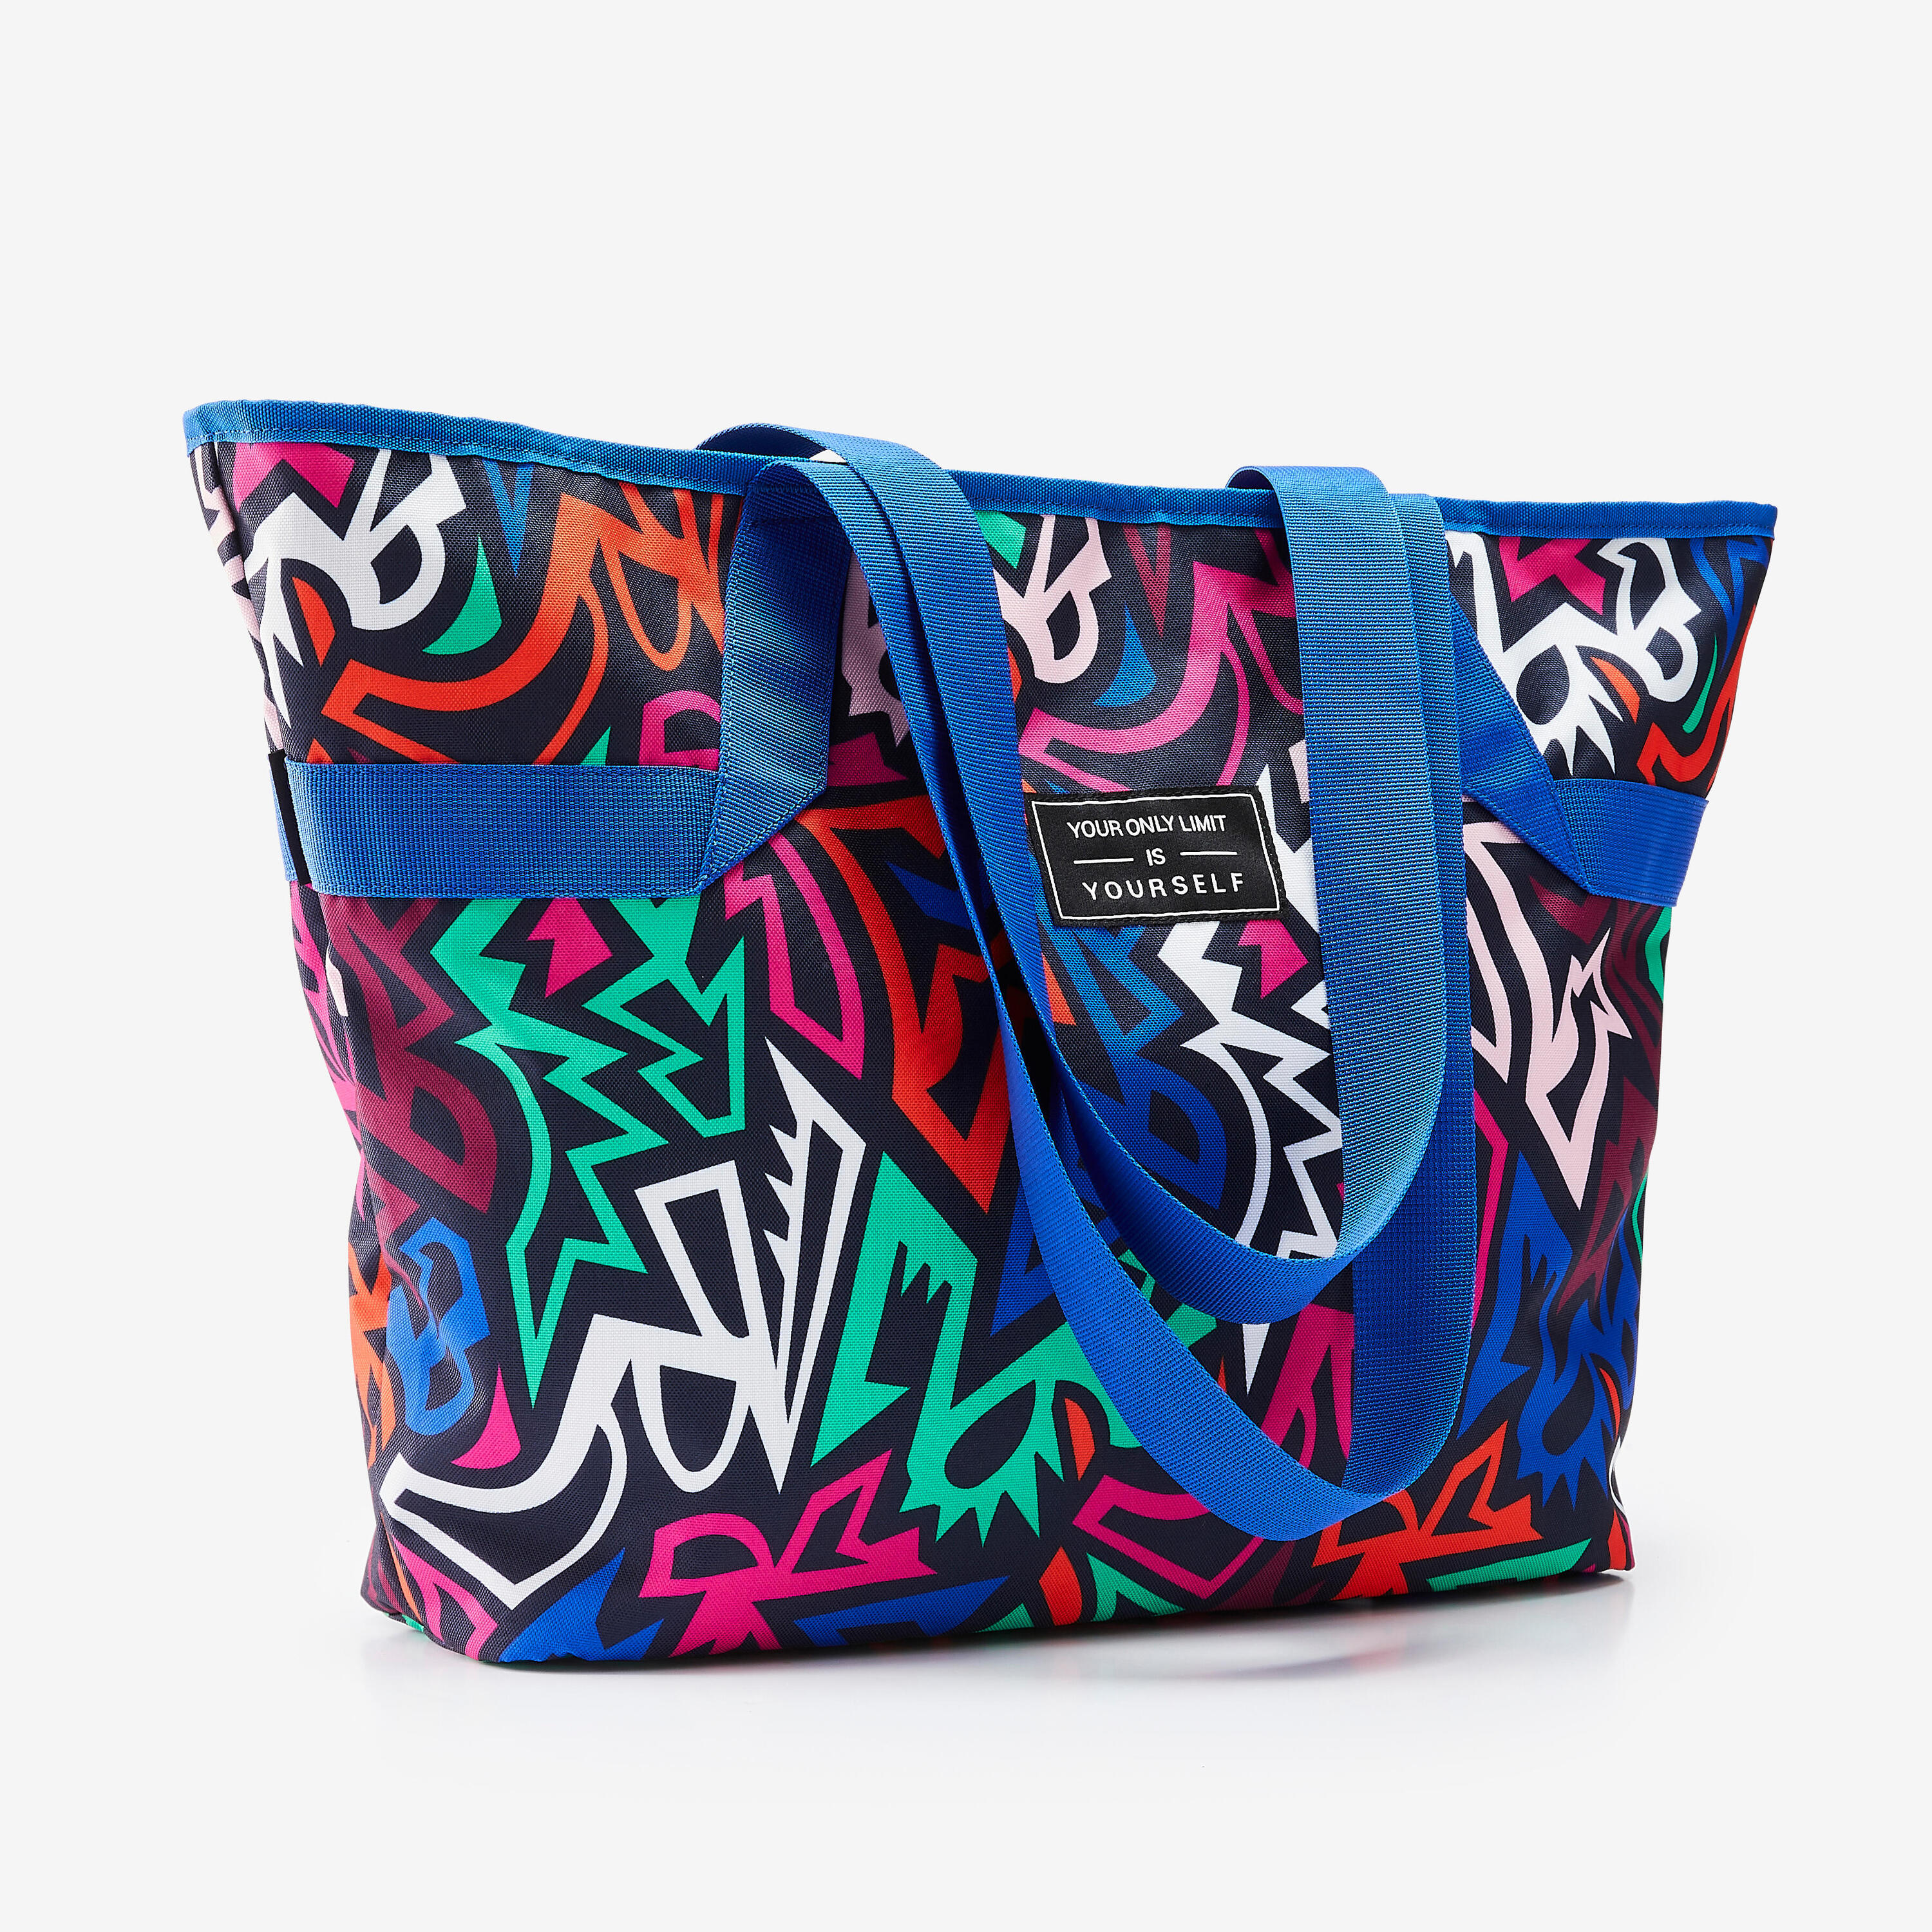 25 L Fitness Tote Bag - Multicoloured Print 1/9